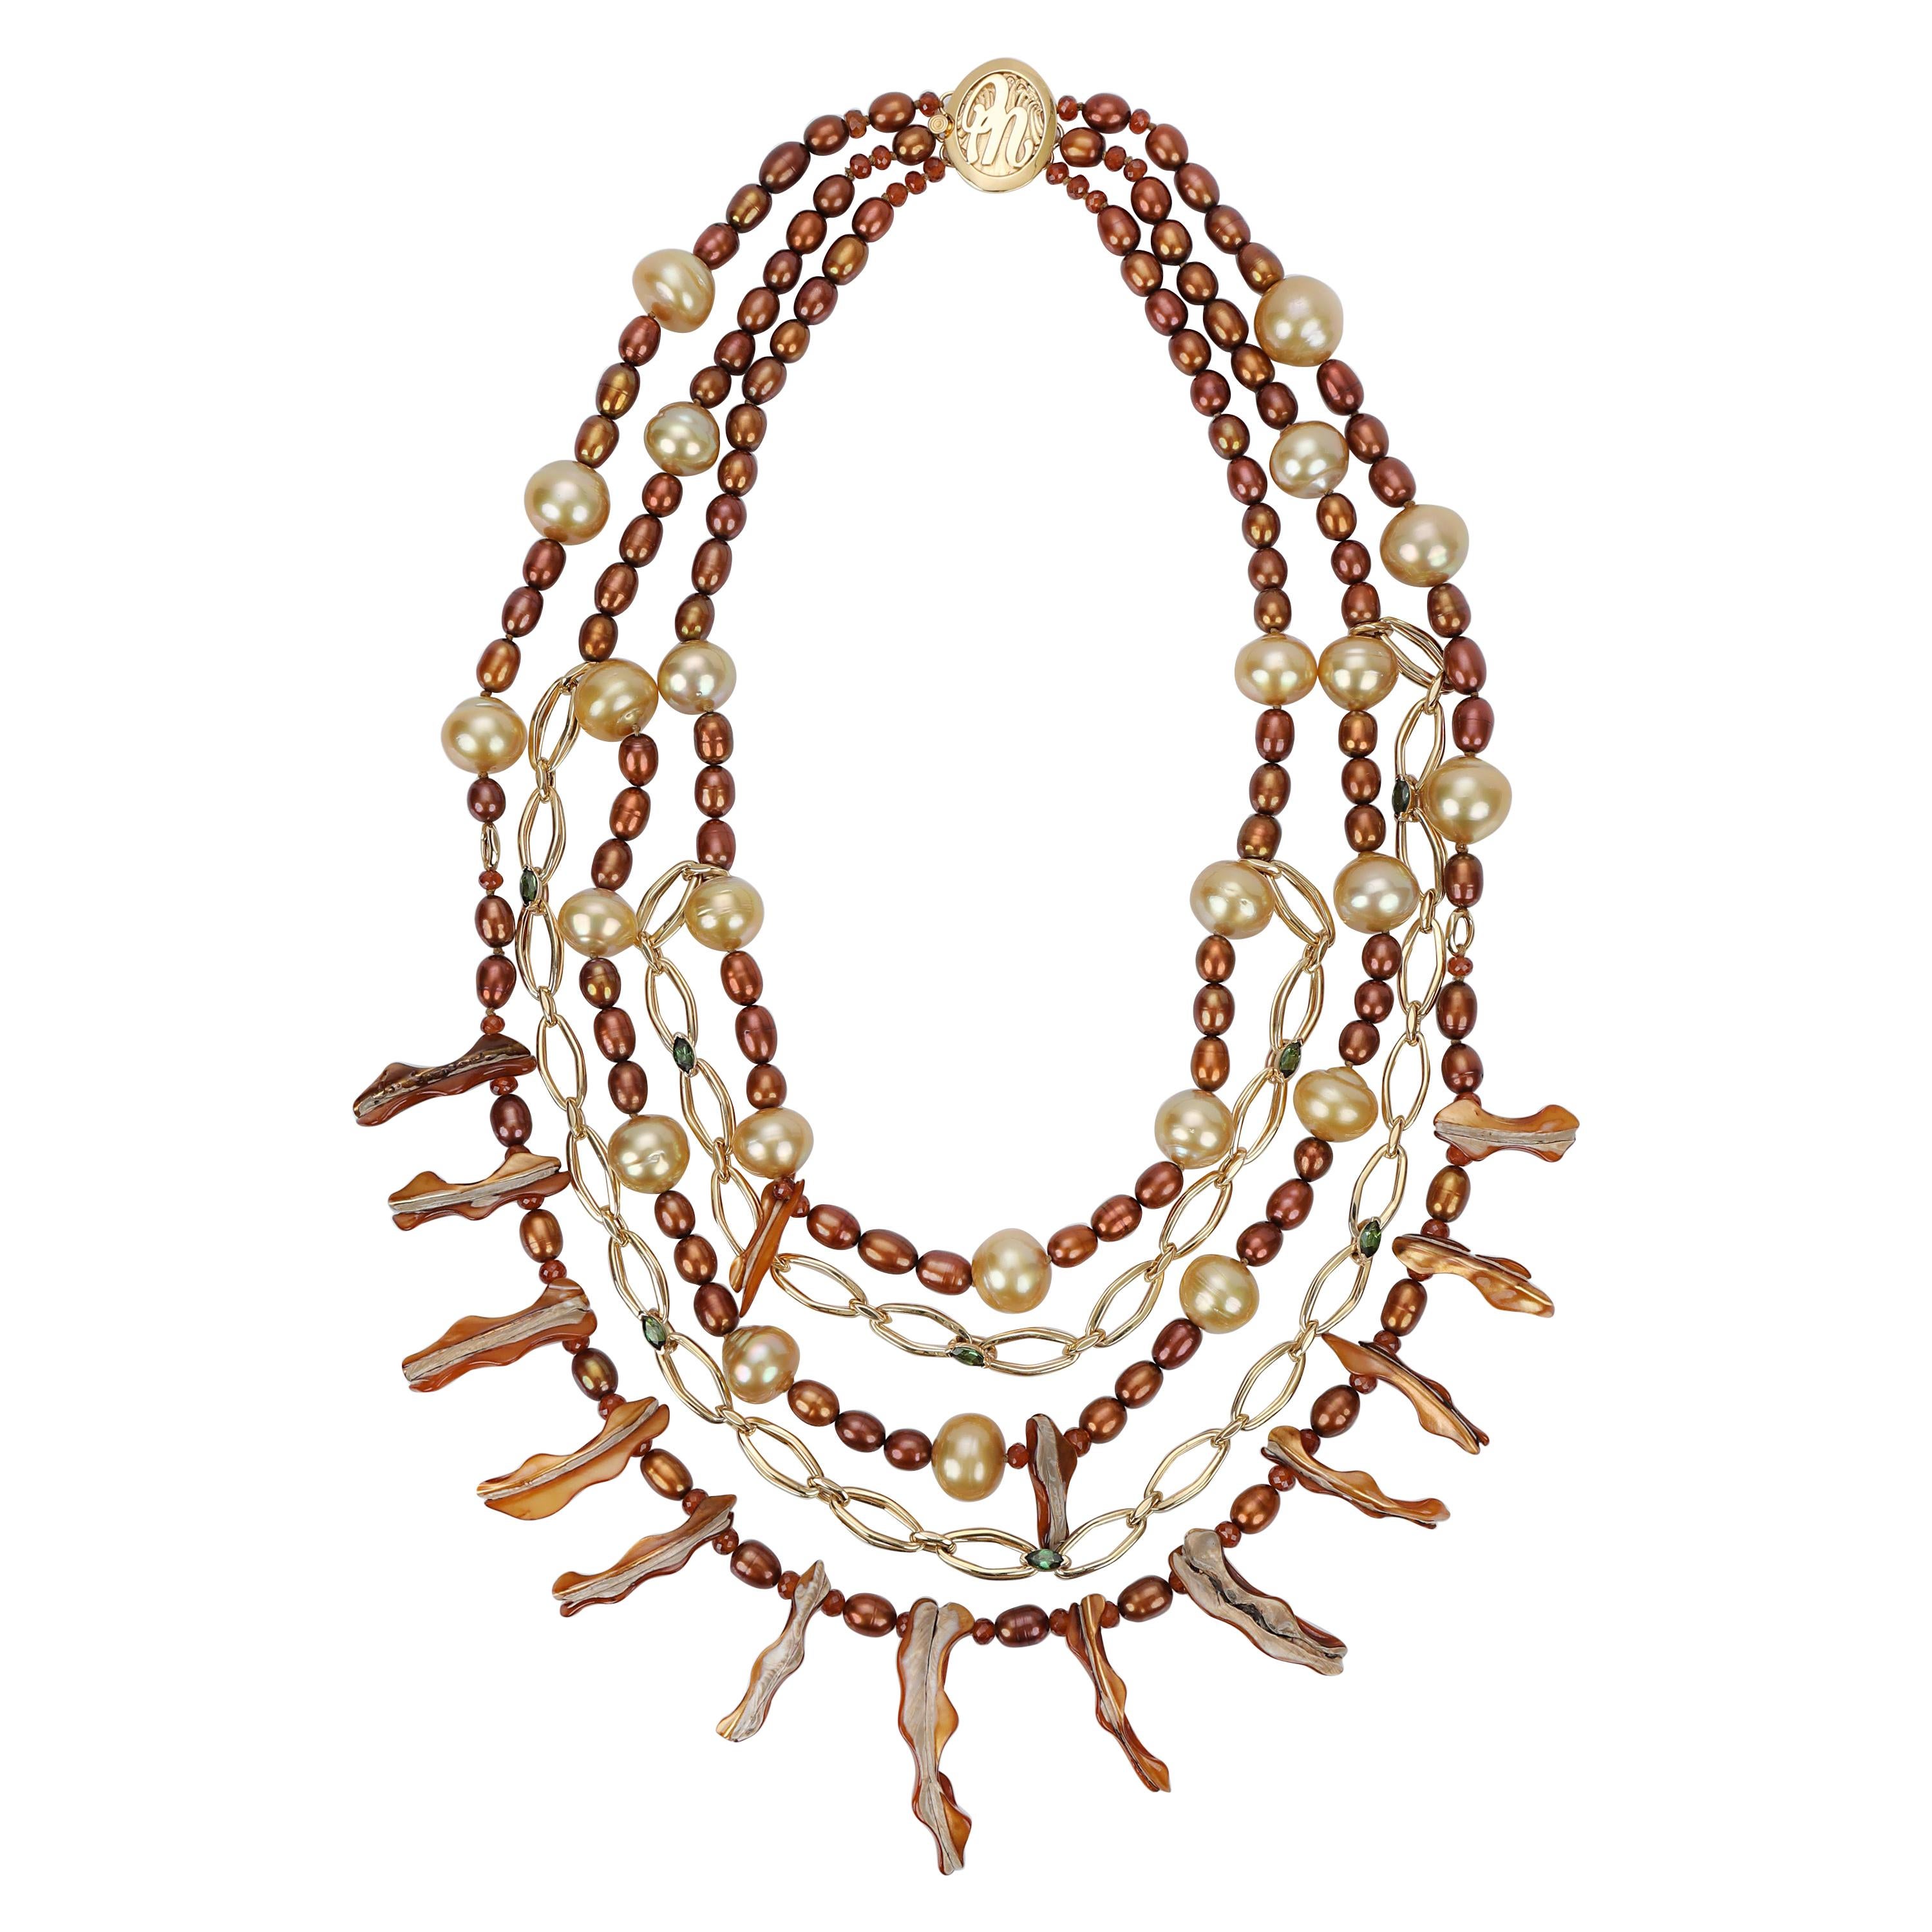 A Pearl, Spessartite Garnet, Tourmaline, and Gold Bib Necklace For Sale